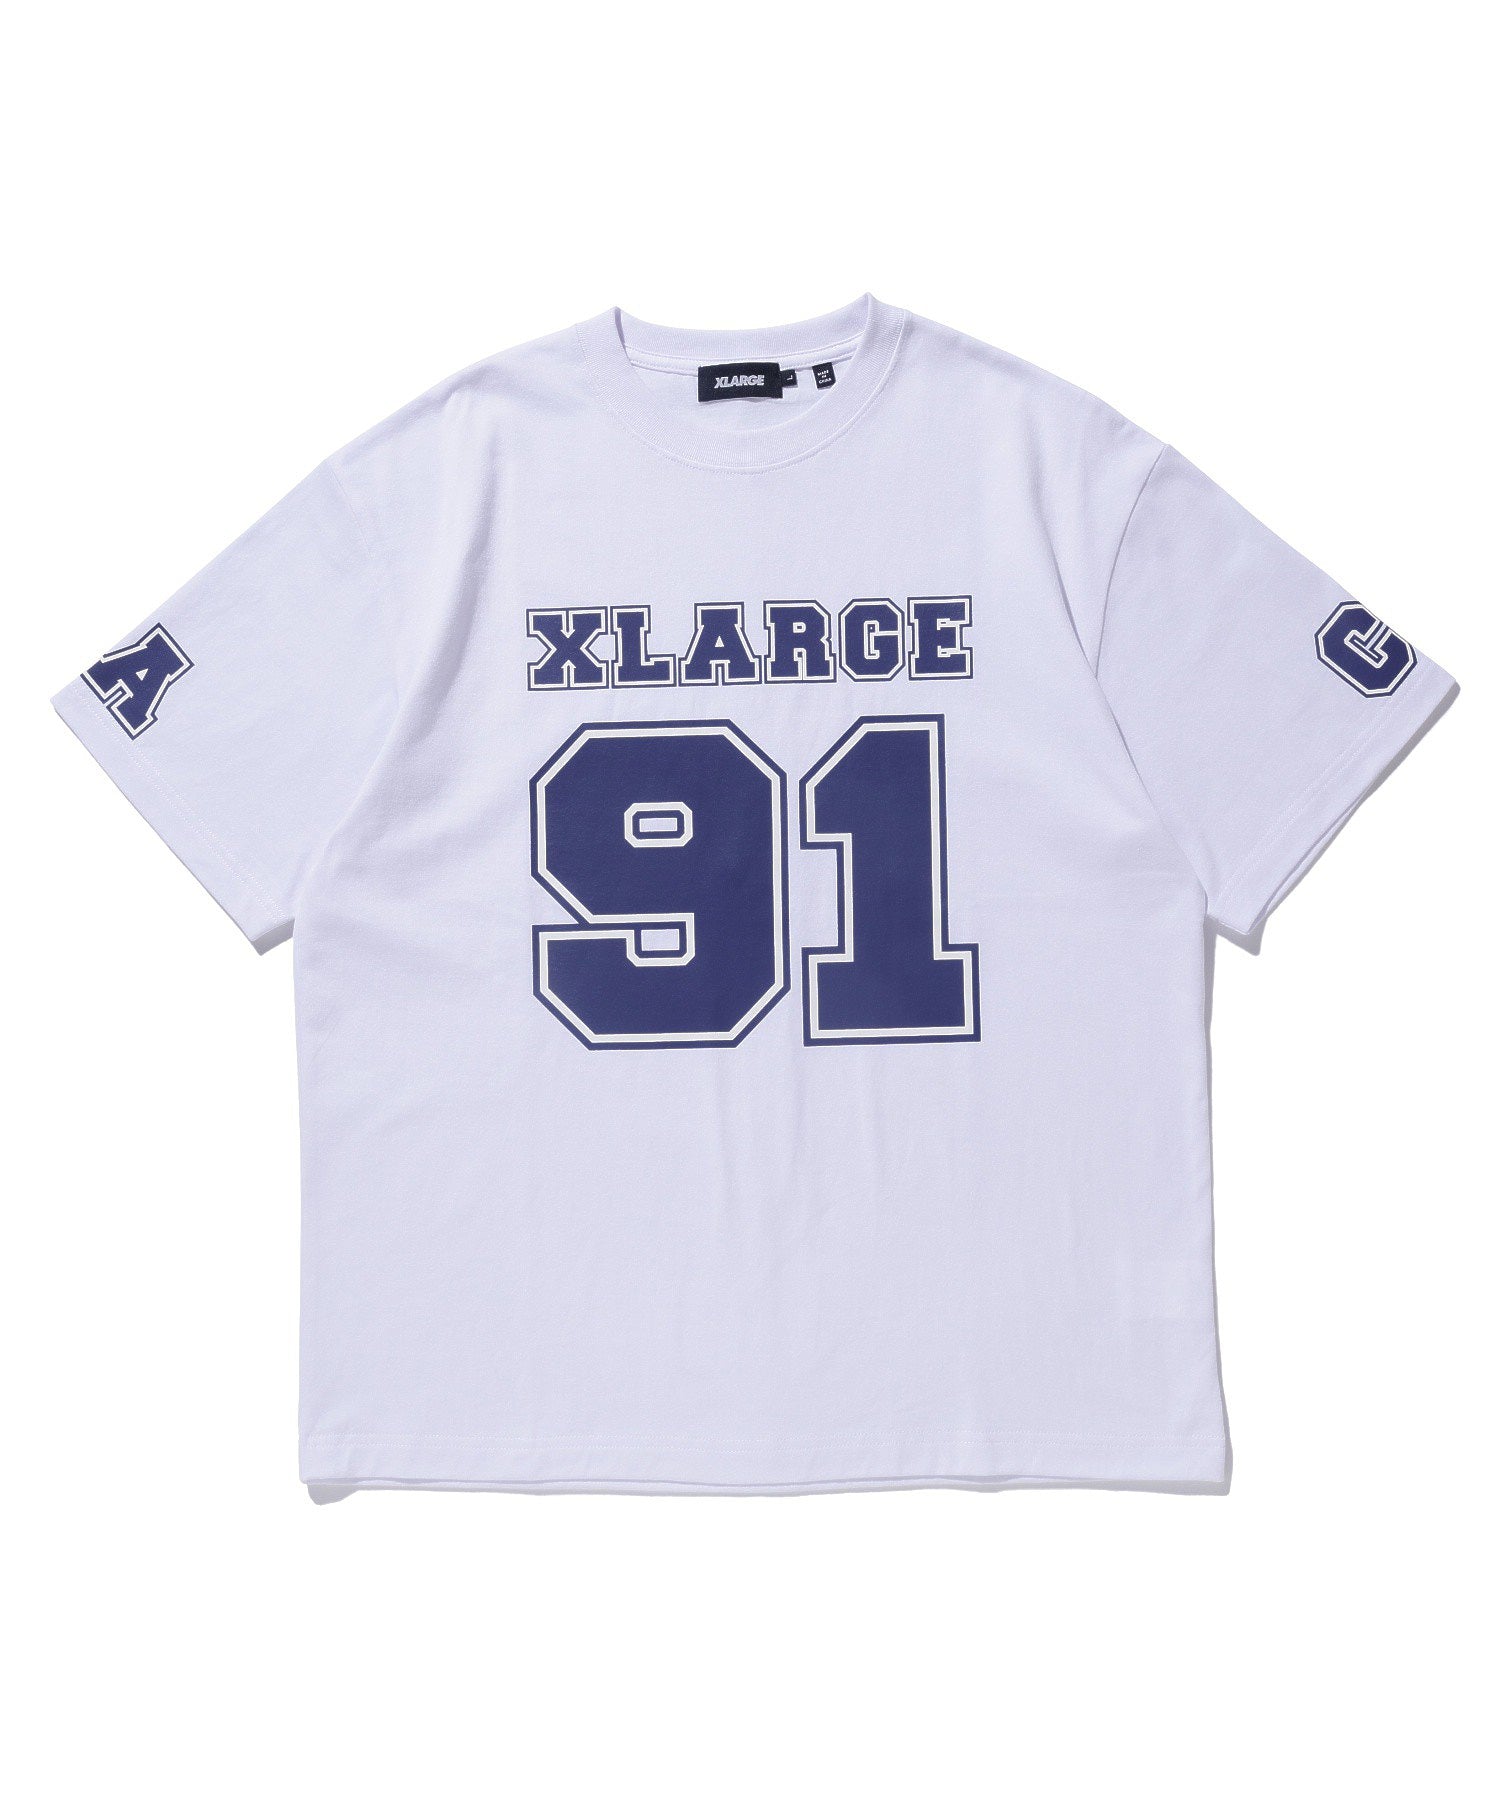 XLARGE 91 S/S TEE